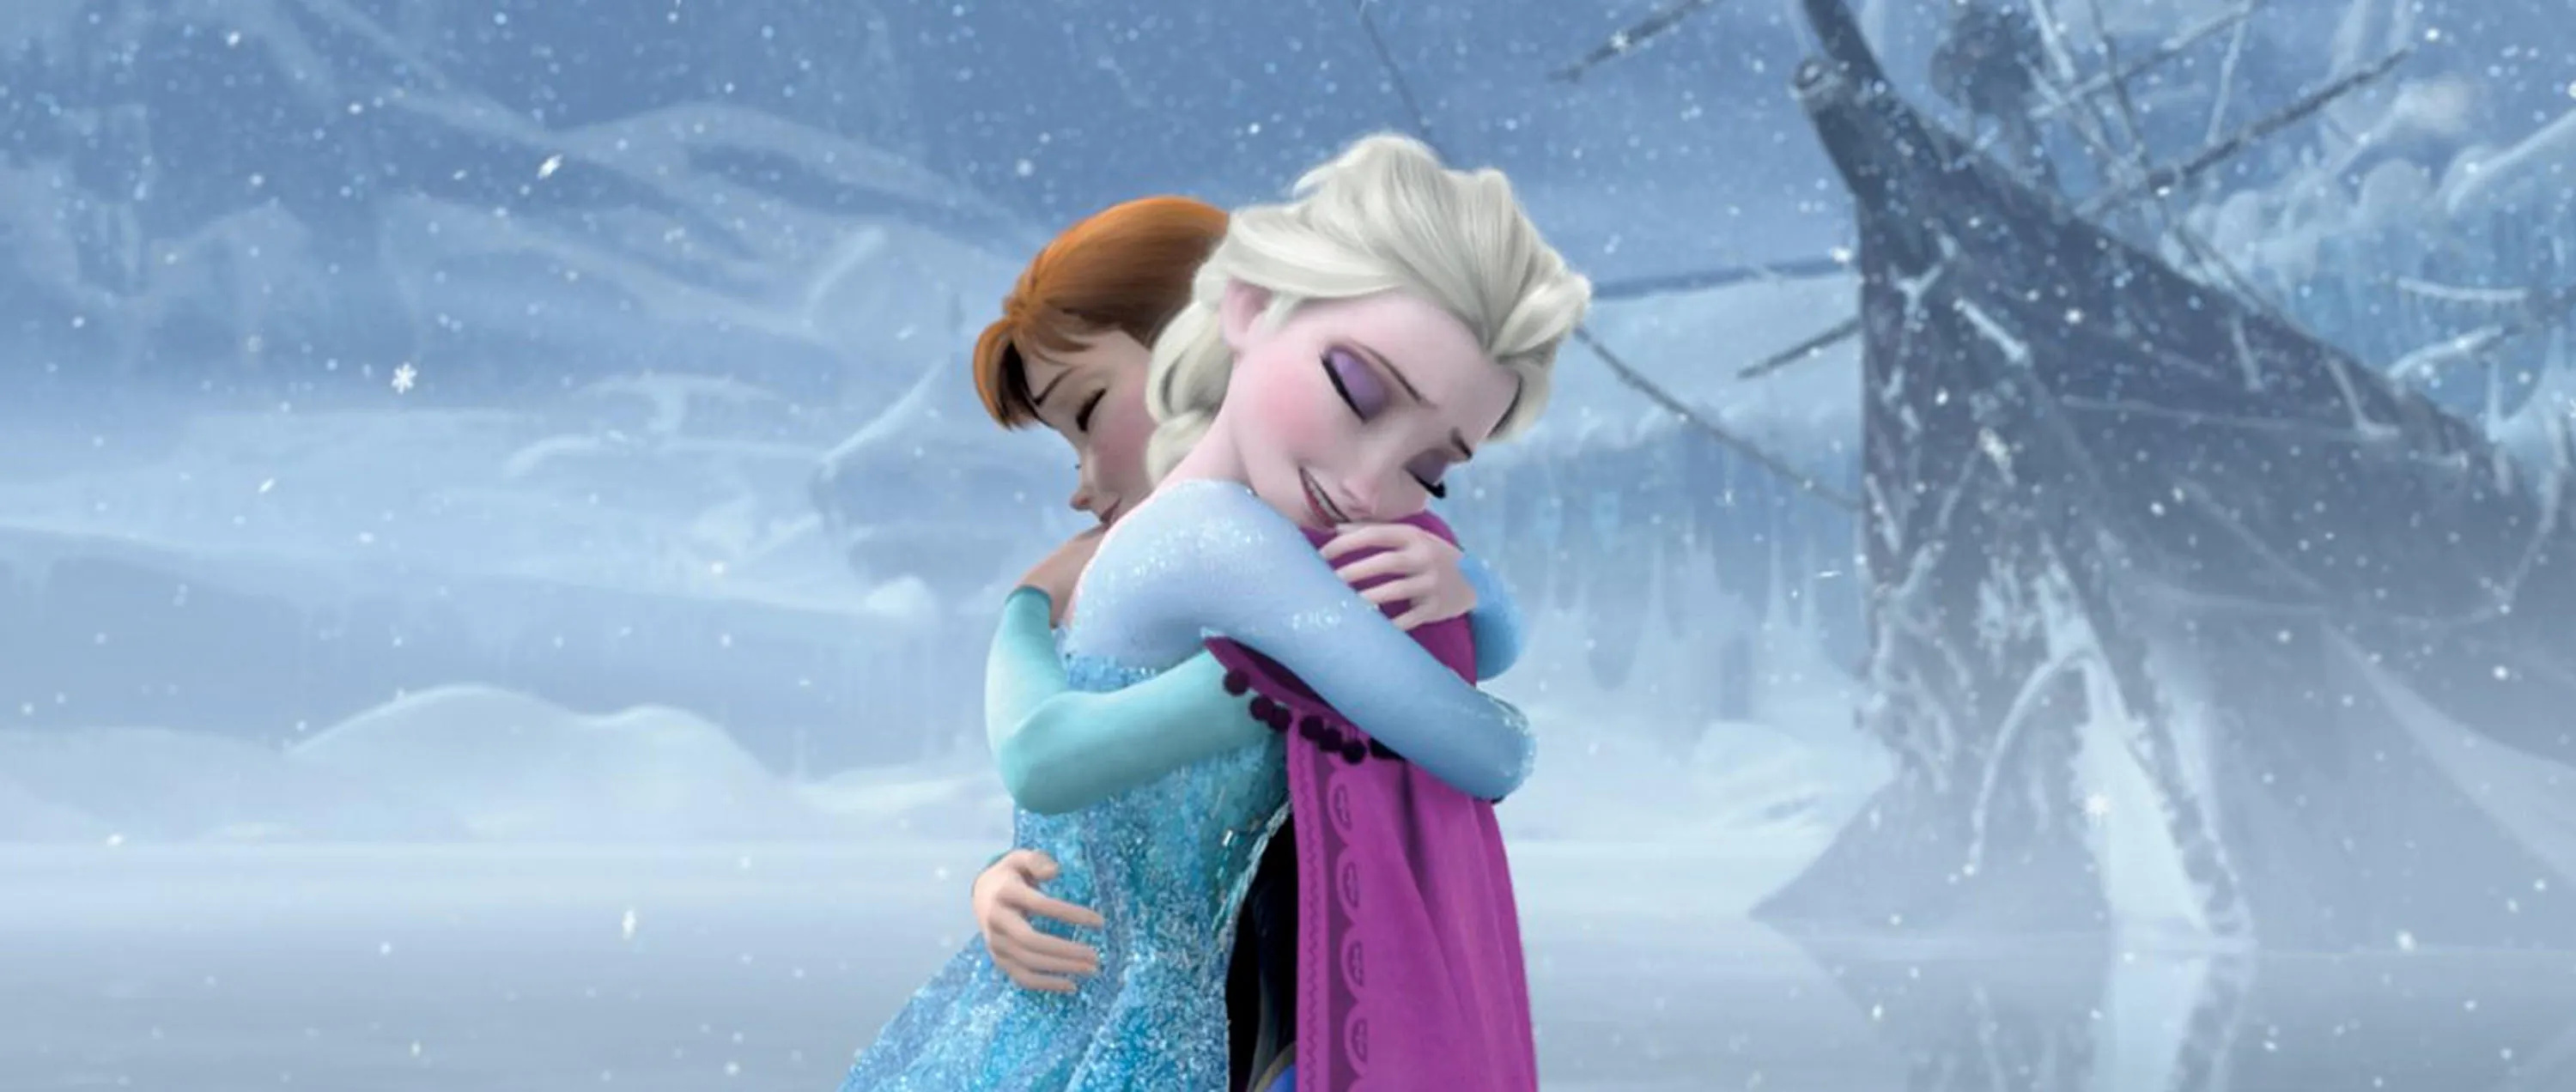 Frozen movie, Elsa and Anna, Enemies, Sisters, 3000x1280 Dual Screen Desktop